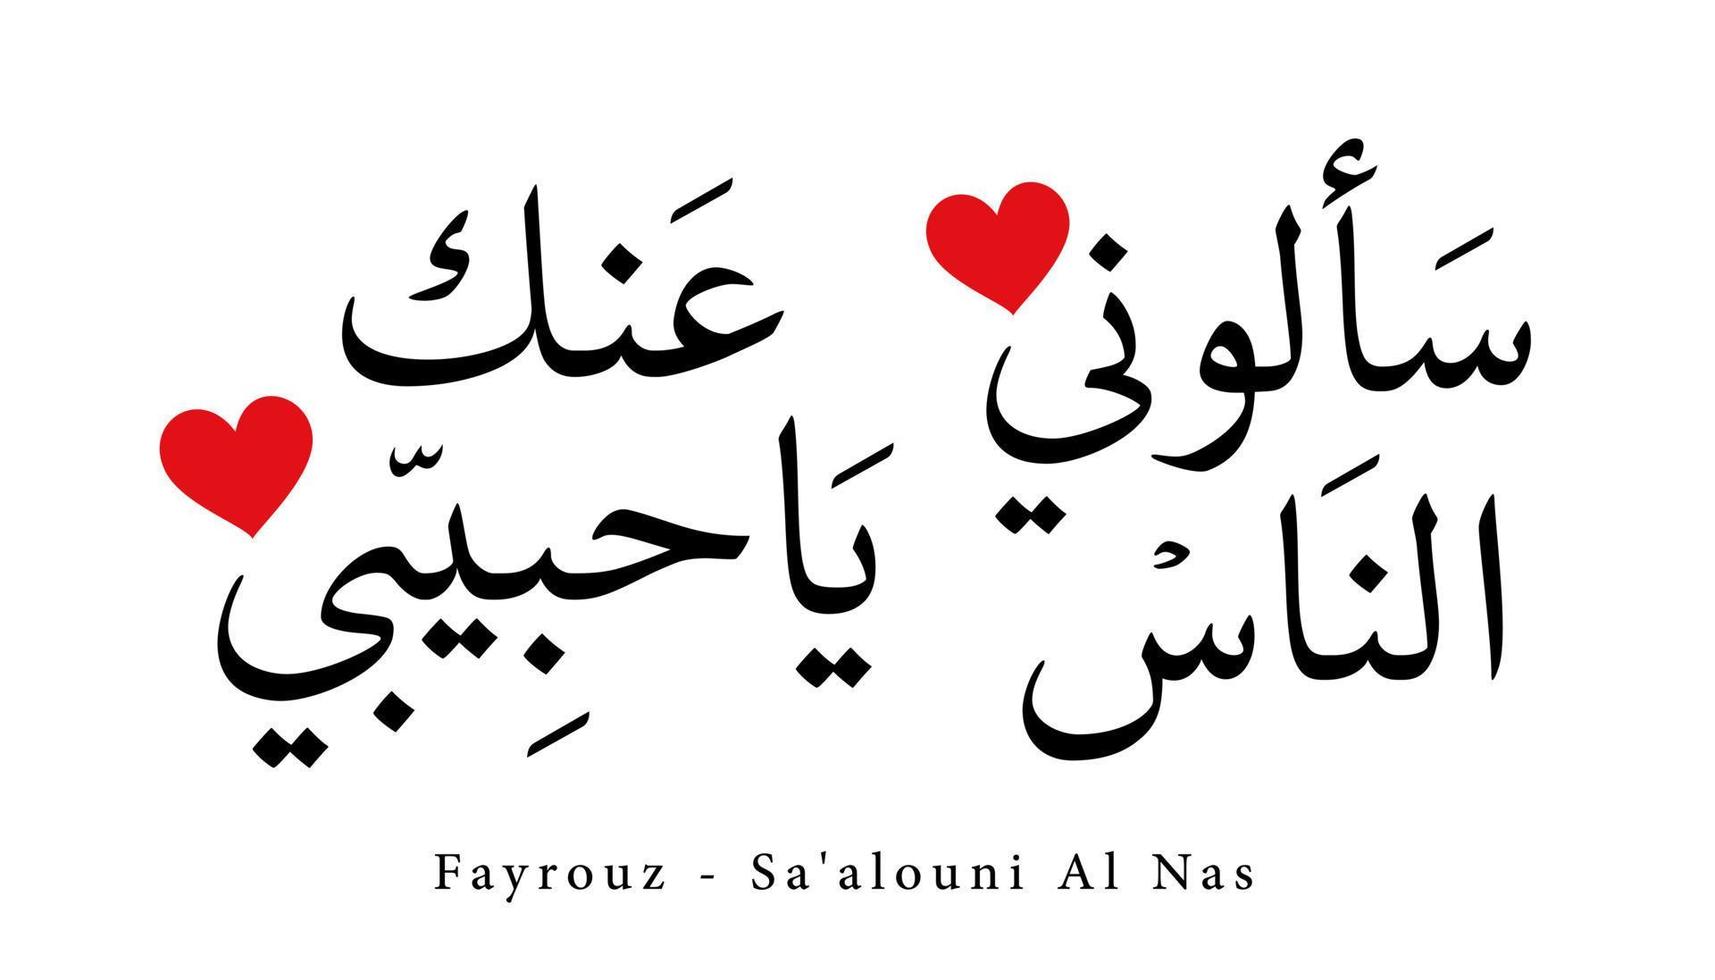 canción de caligrafía árabe traducida 'fayrouz - sa'alouni al nas' letras árabes alfabeto fuente letras islámicas logo vector ilustración